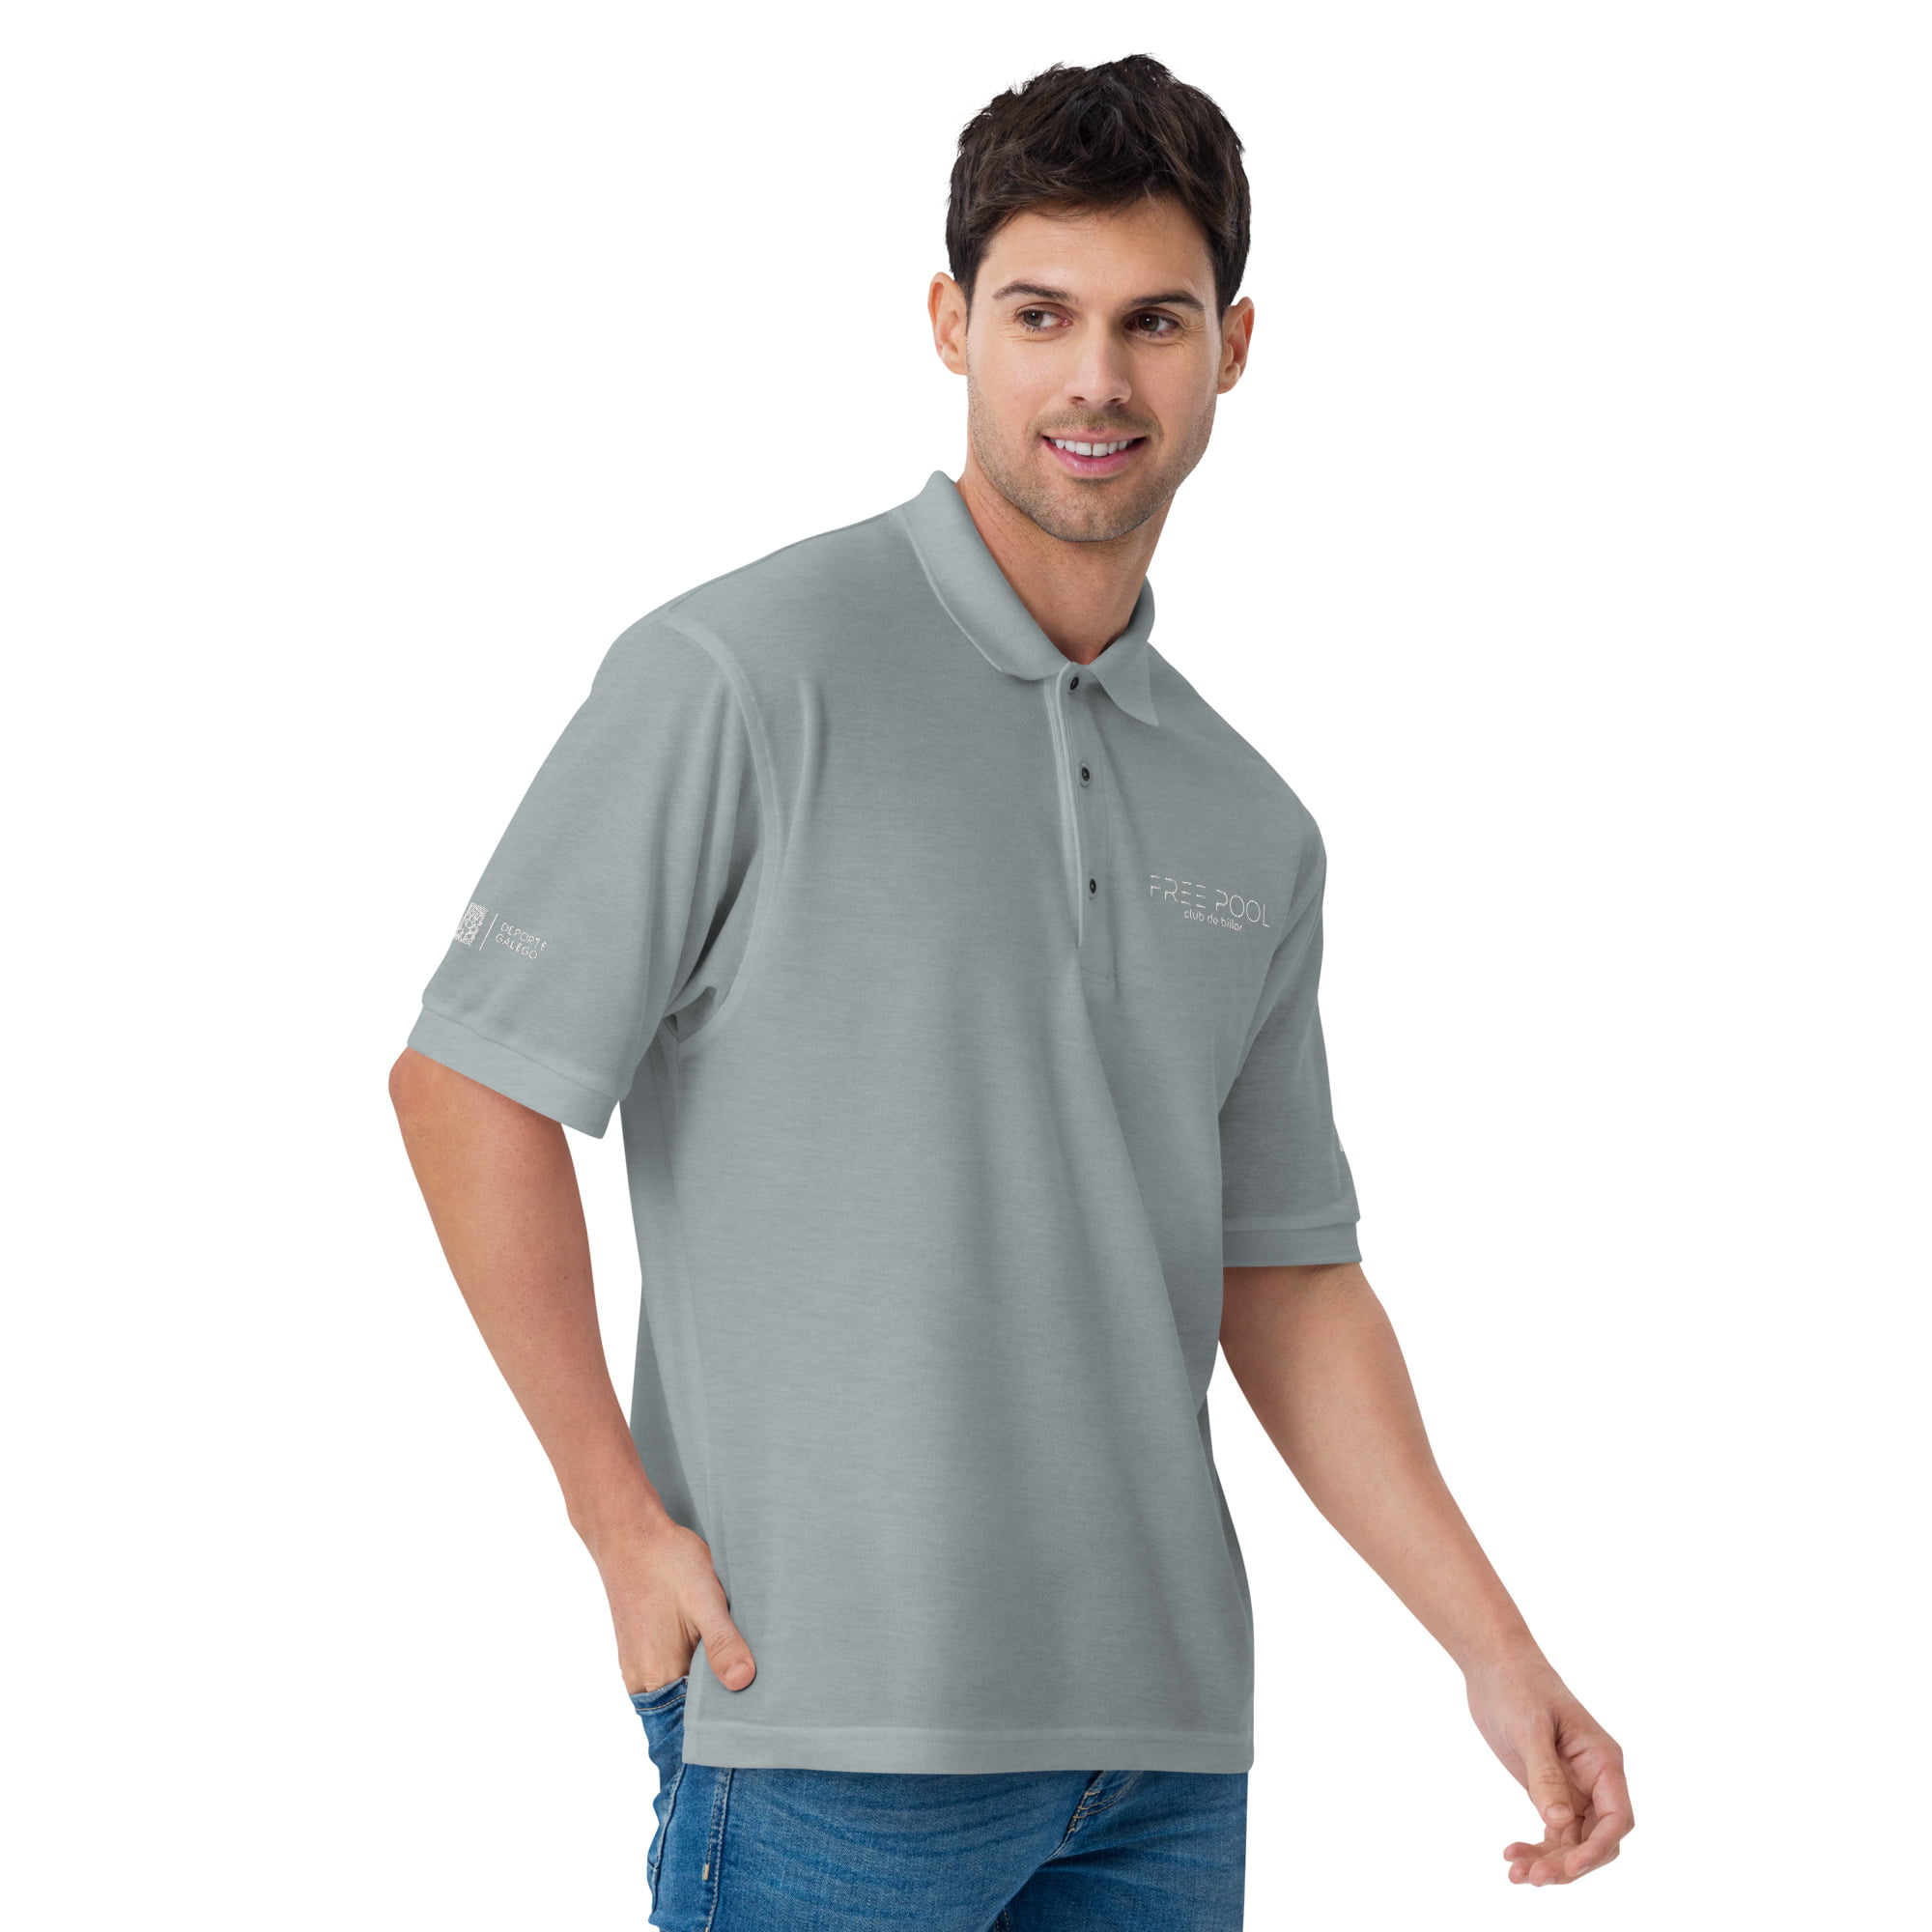 premium-polo-shirt-cool-heather-right-front-64864692e410c.jpg